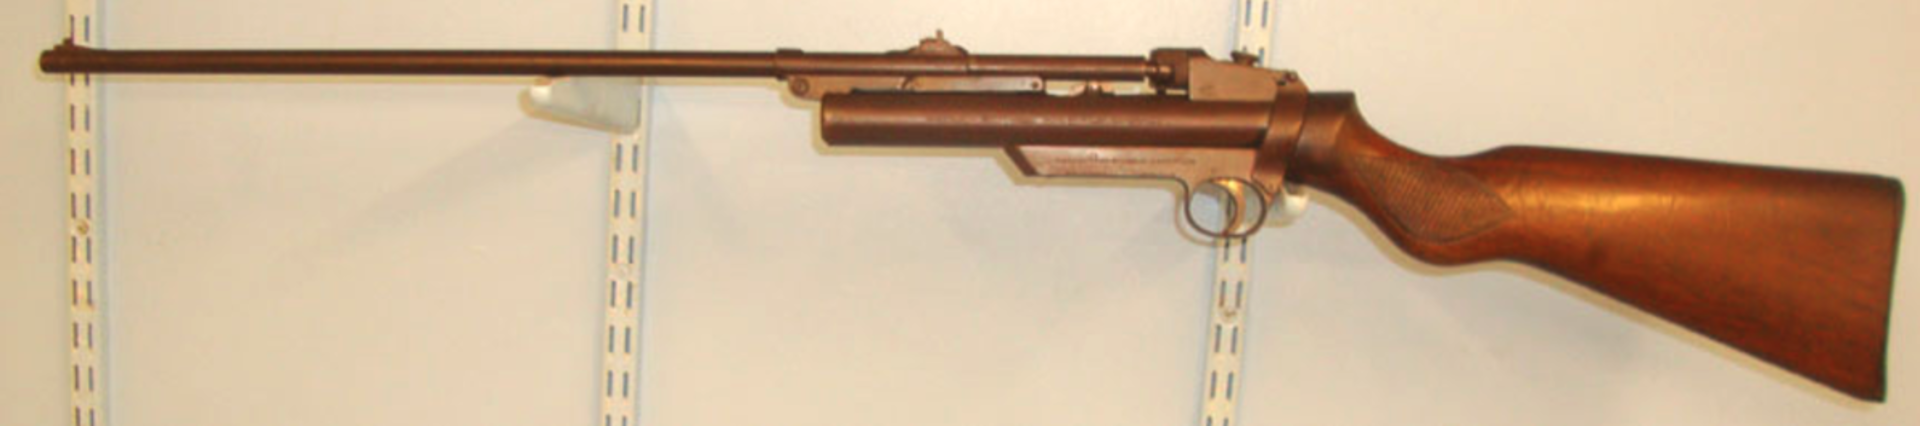 1930's 3rd Series Webley Service MK II .22 Calibre Air Rifle - Image 2 of 3